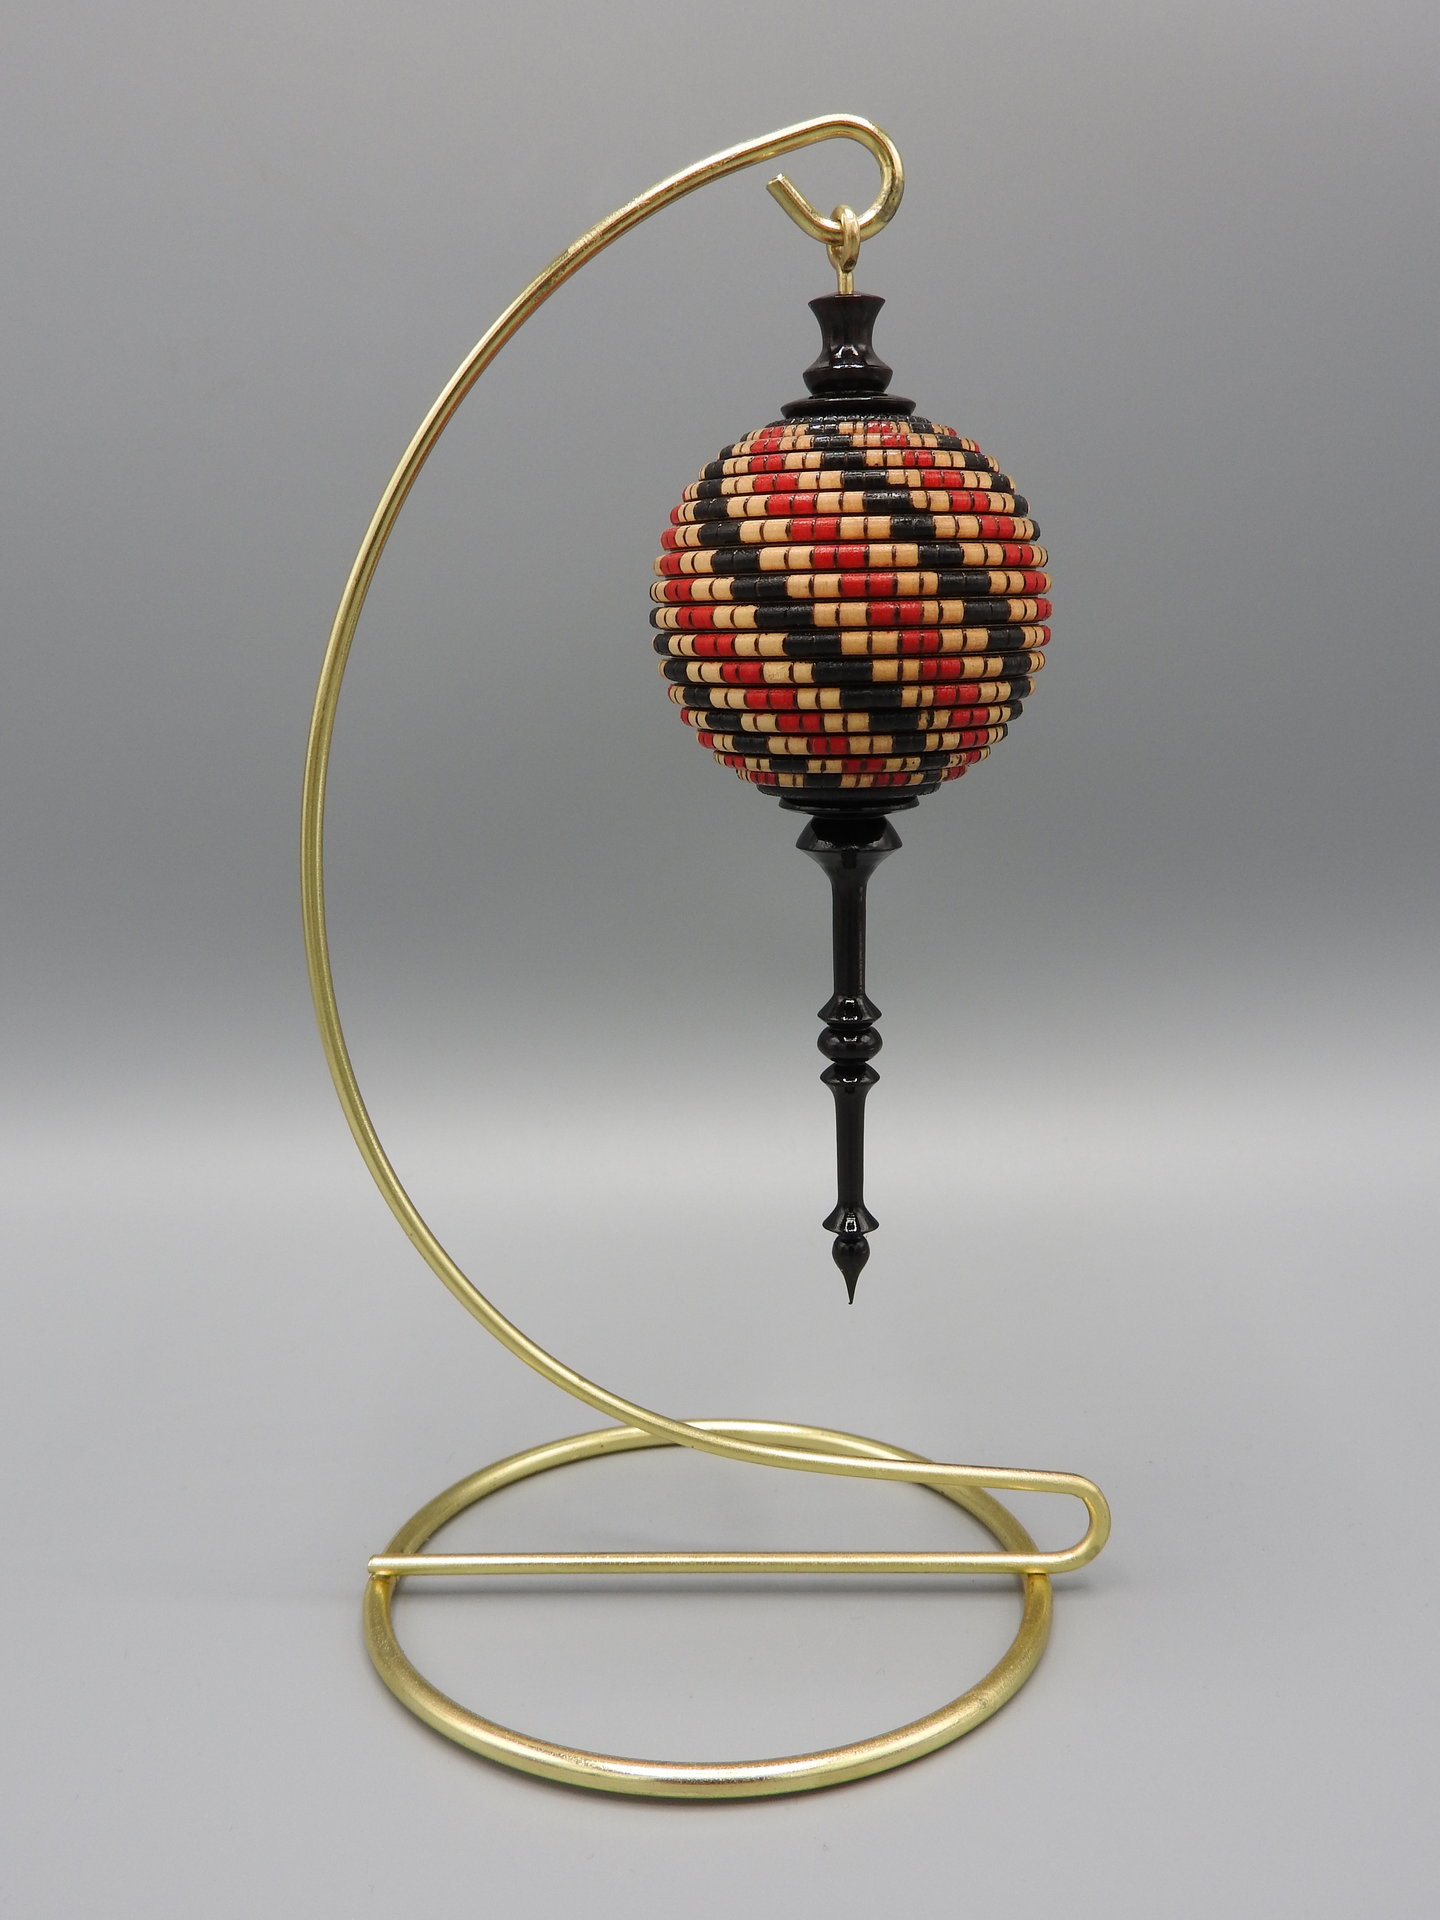 Spiral Basket Illusion Christmas Ornament